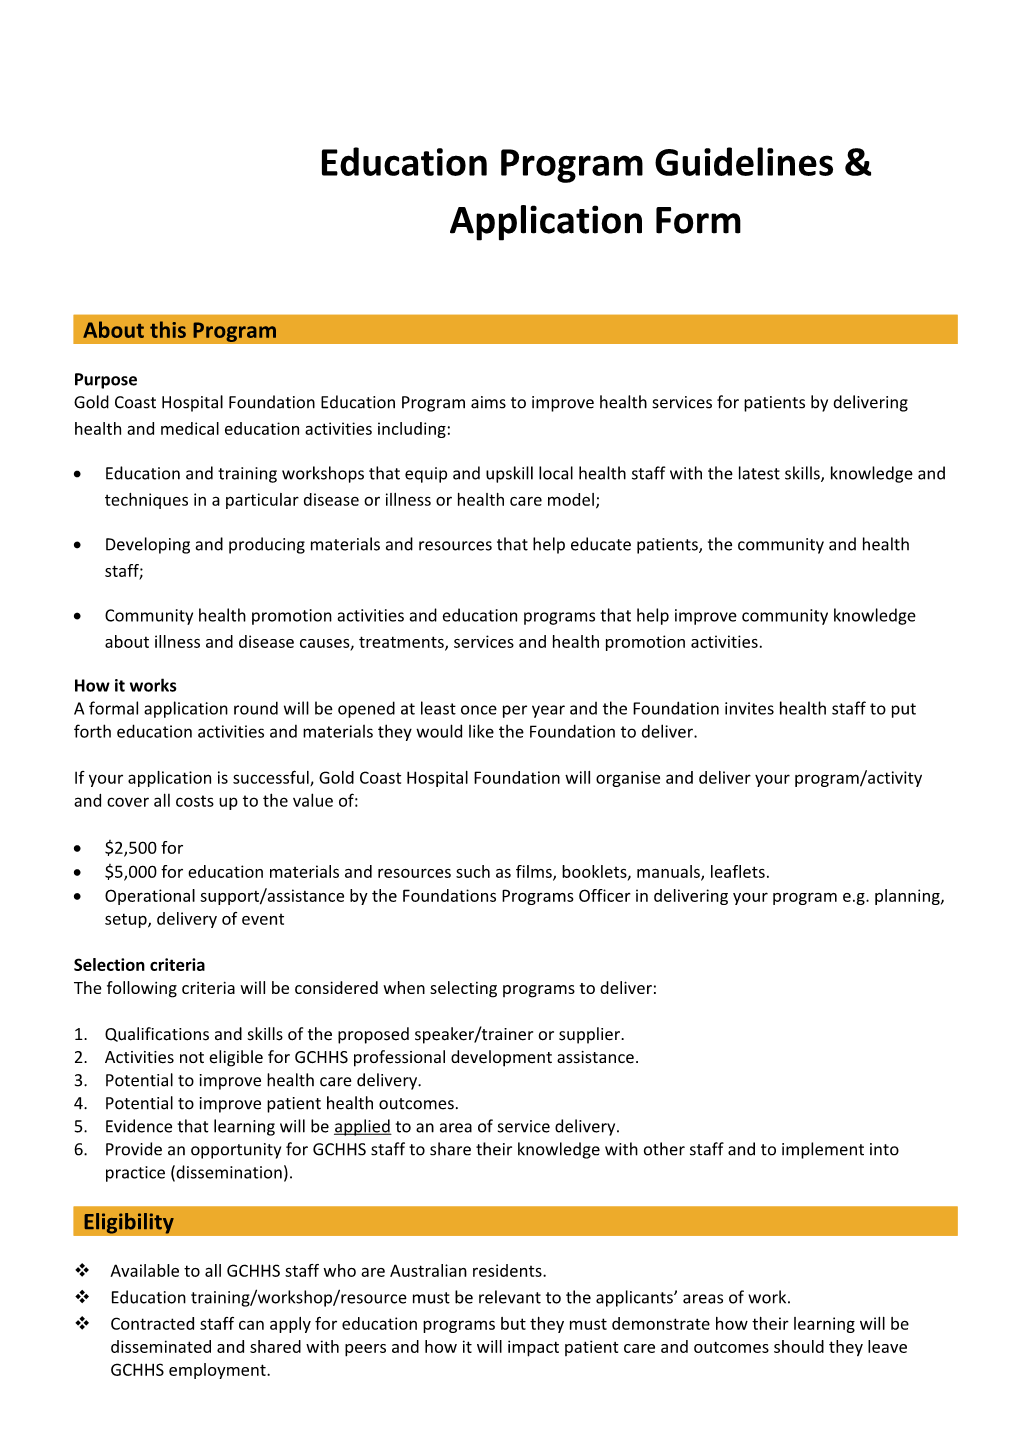 Education Program Guidelines & Application Form